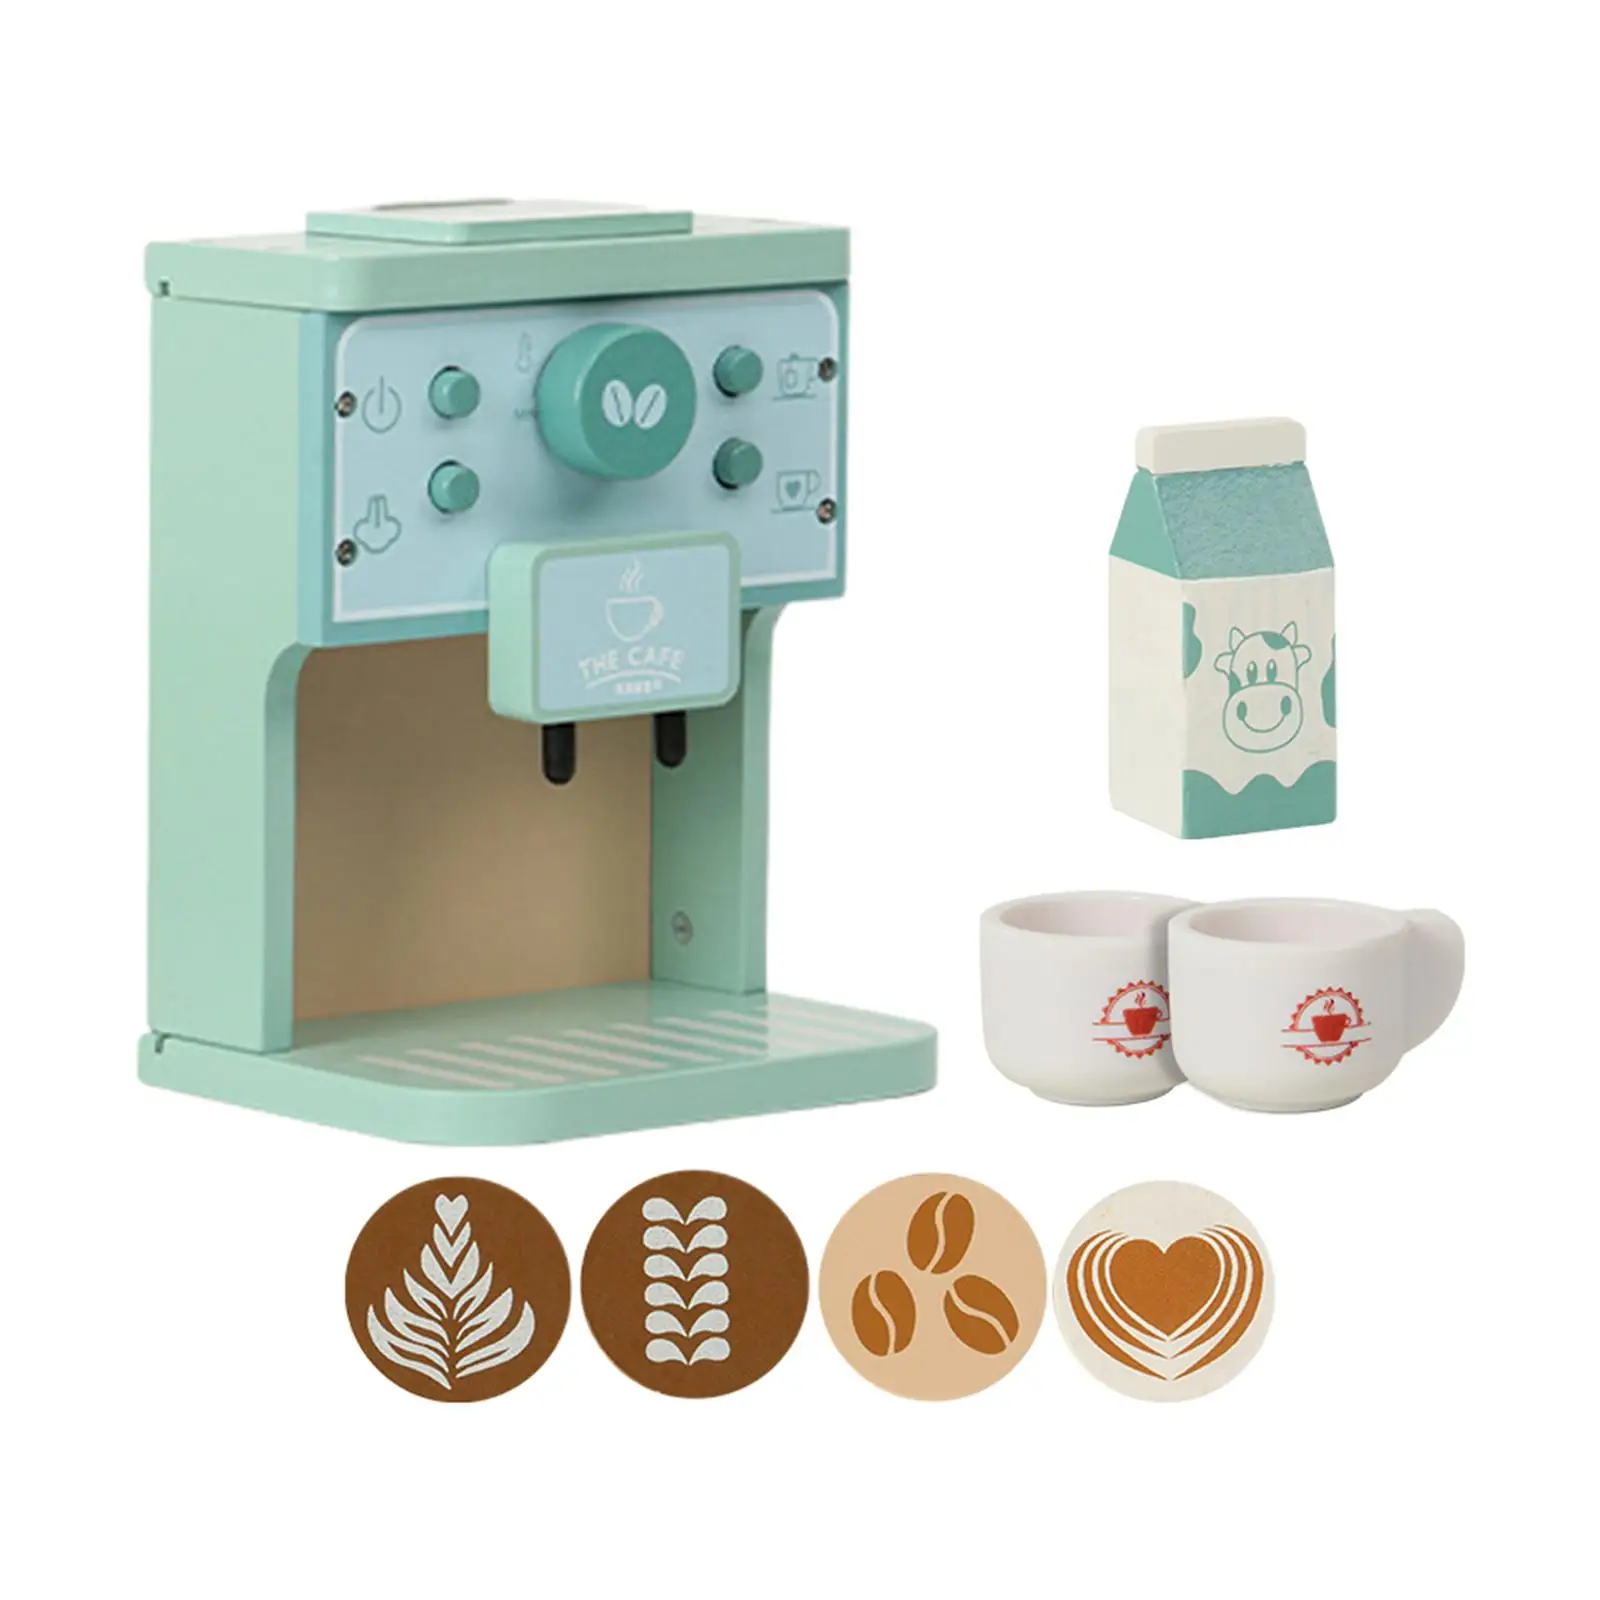 

8 Pieces Espresso Machine Playset Upgraded Toy Coffee Set Play Kitchen Accessories for Children Girls Boys Kids Birthday Gifts